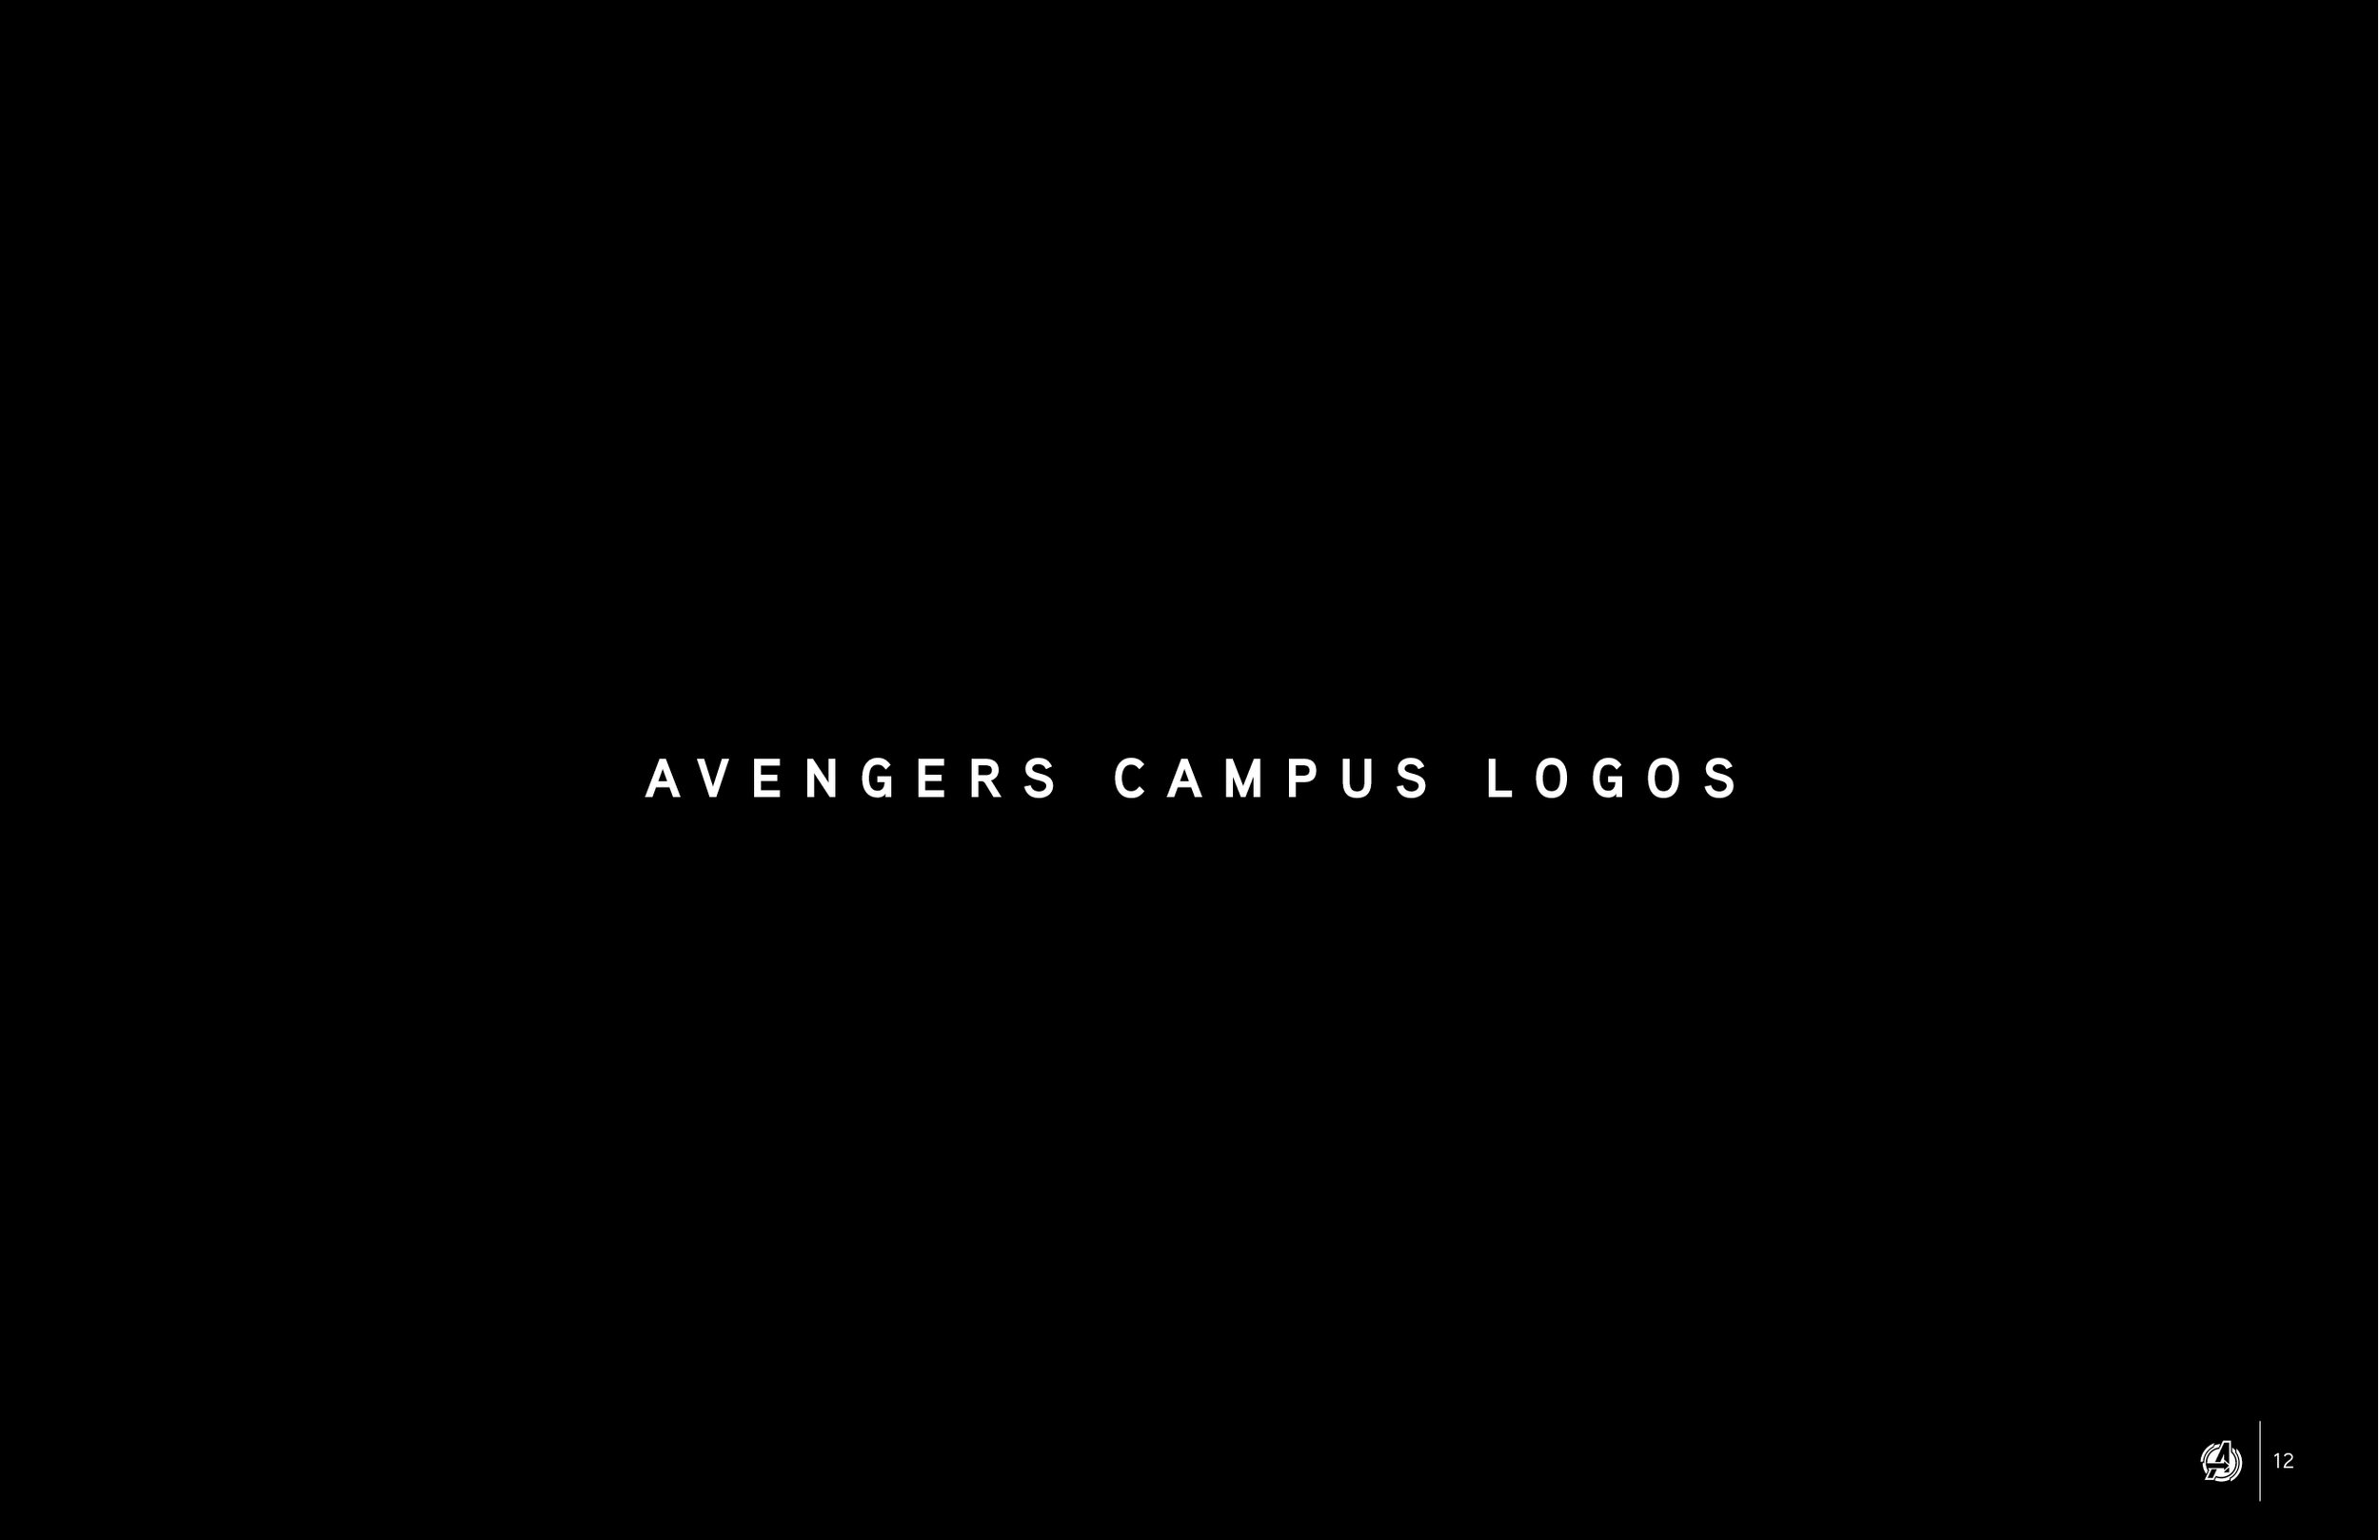 AvengersCampus_StyleGuide_Website_12.jpg